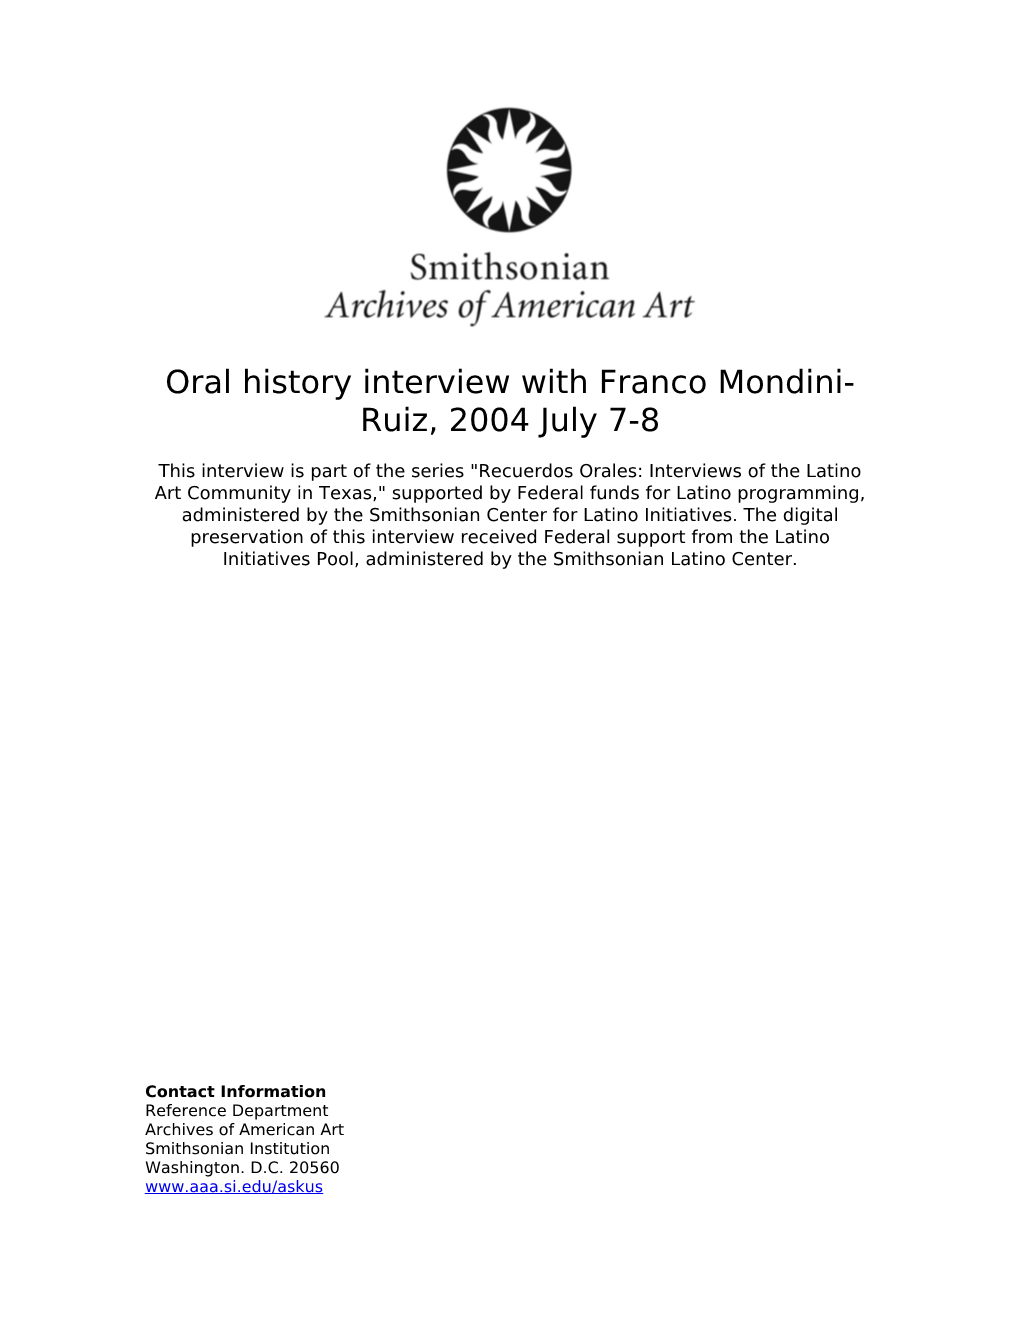 Oral History Interview with Franco Mondini- Ruiz, 2004 July 7-8